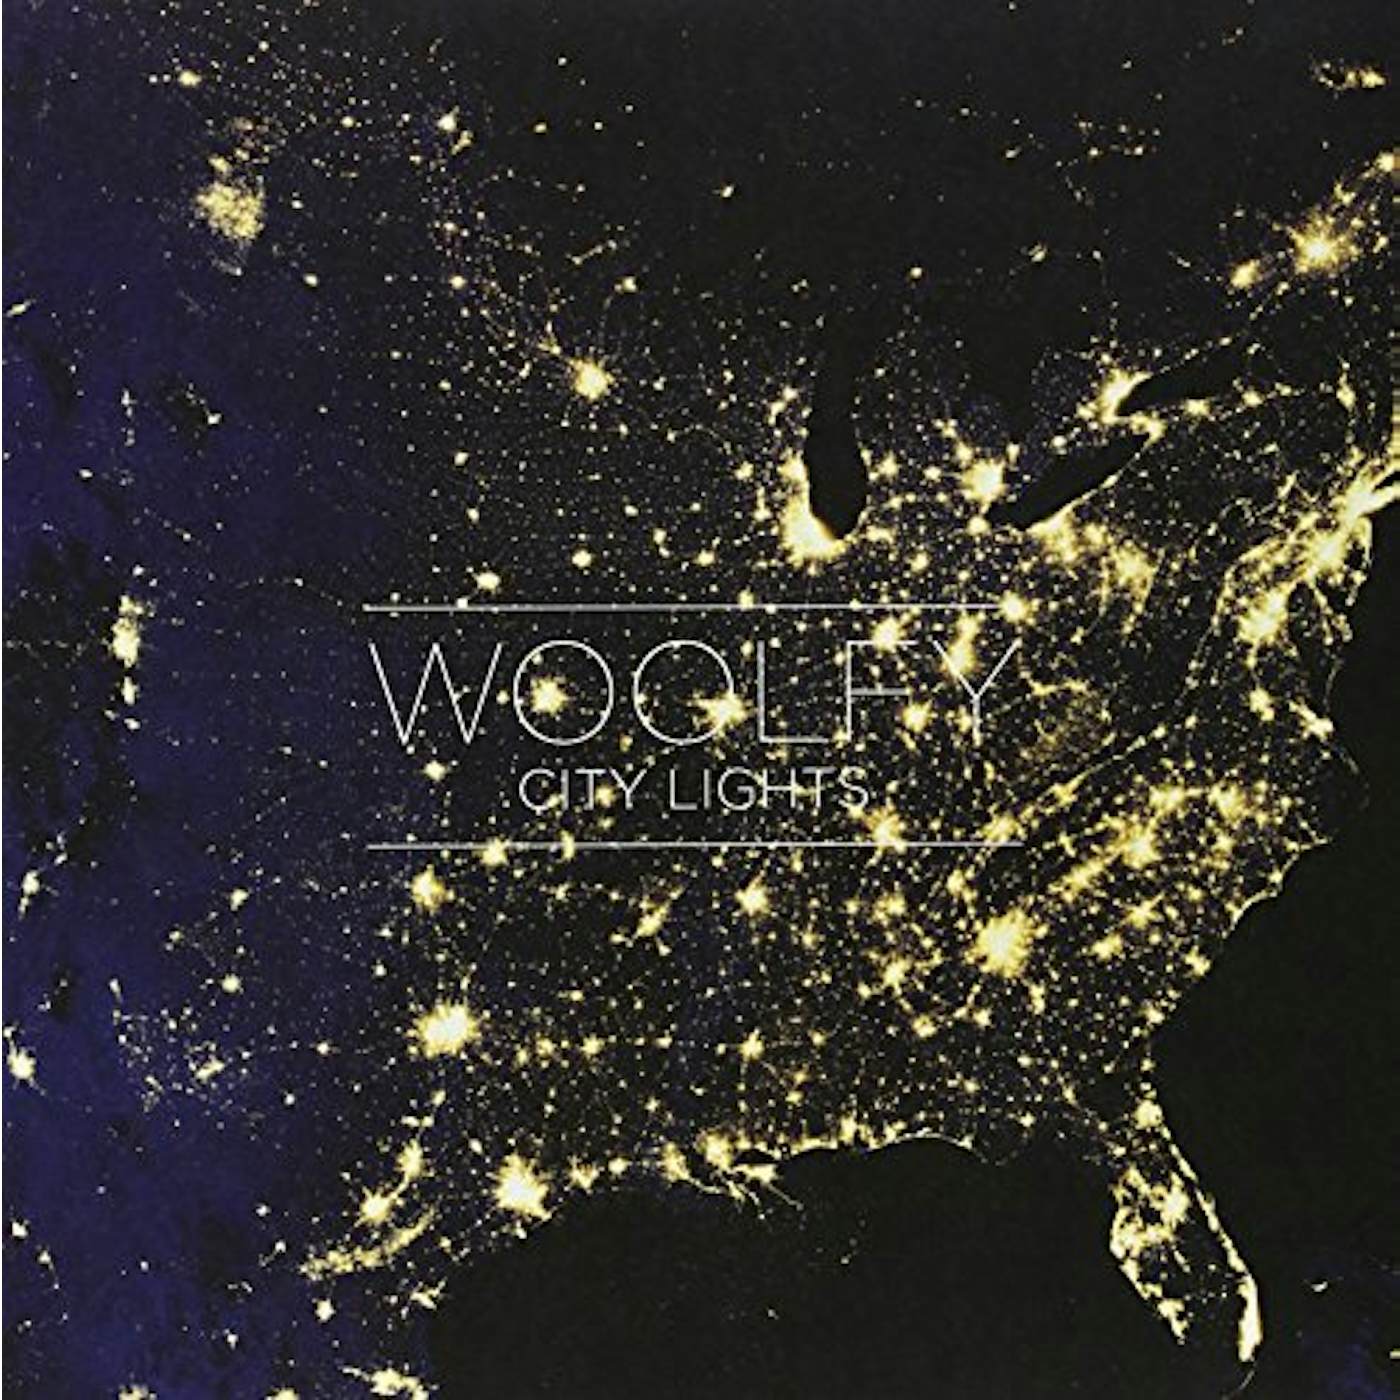 Woolfy City Lights Vinyl Record